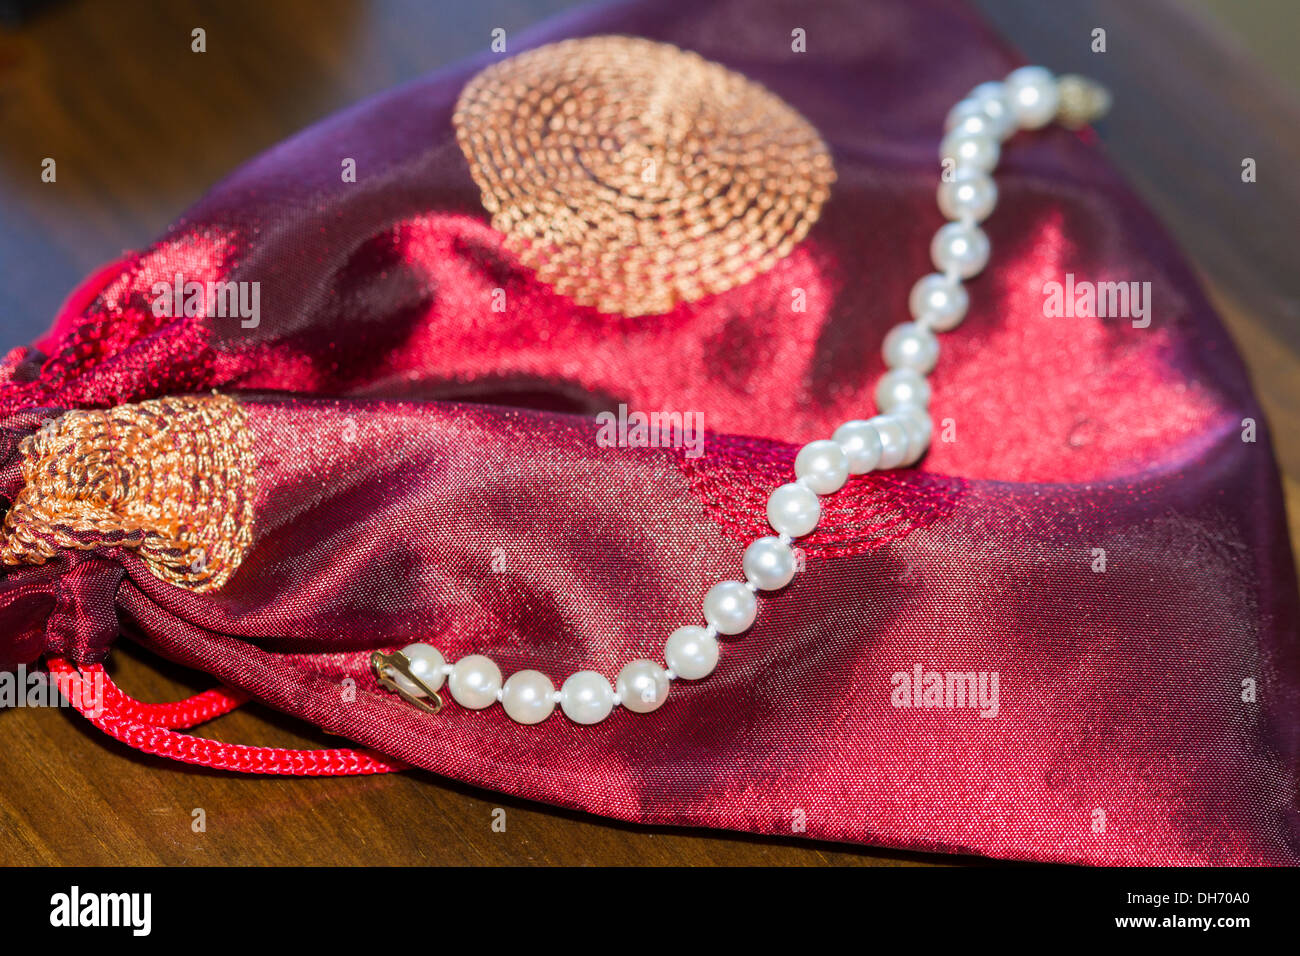 Wedding celebration image with purple velvet jewelry bag and white pearls Stock Photo